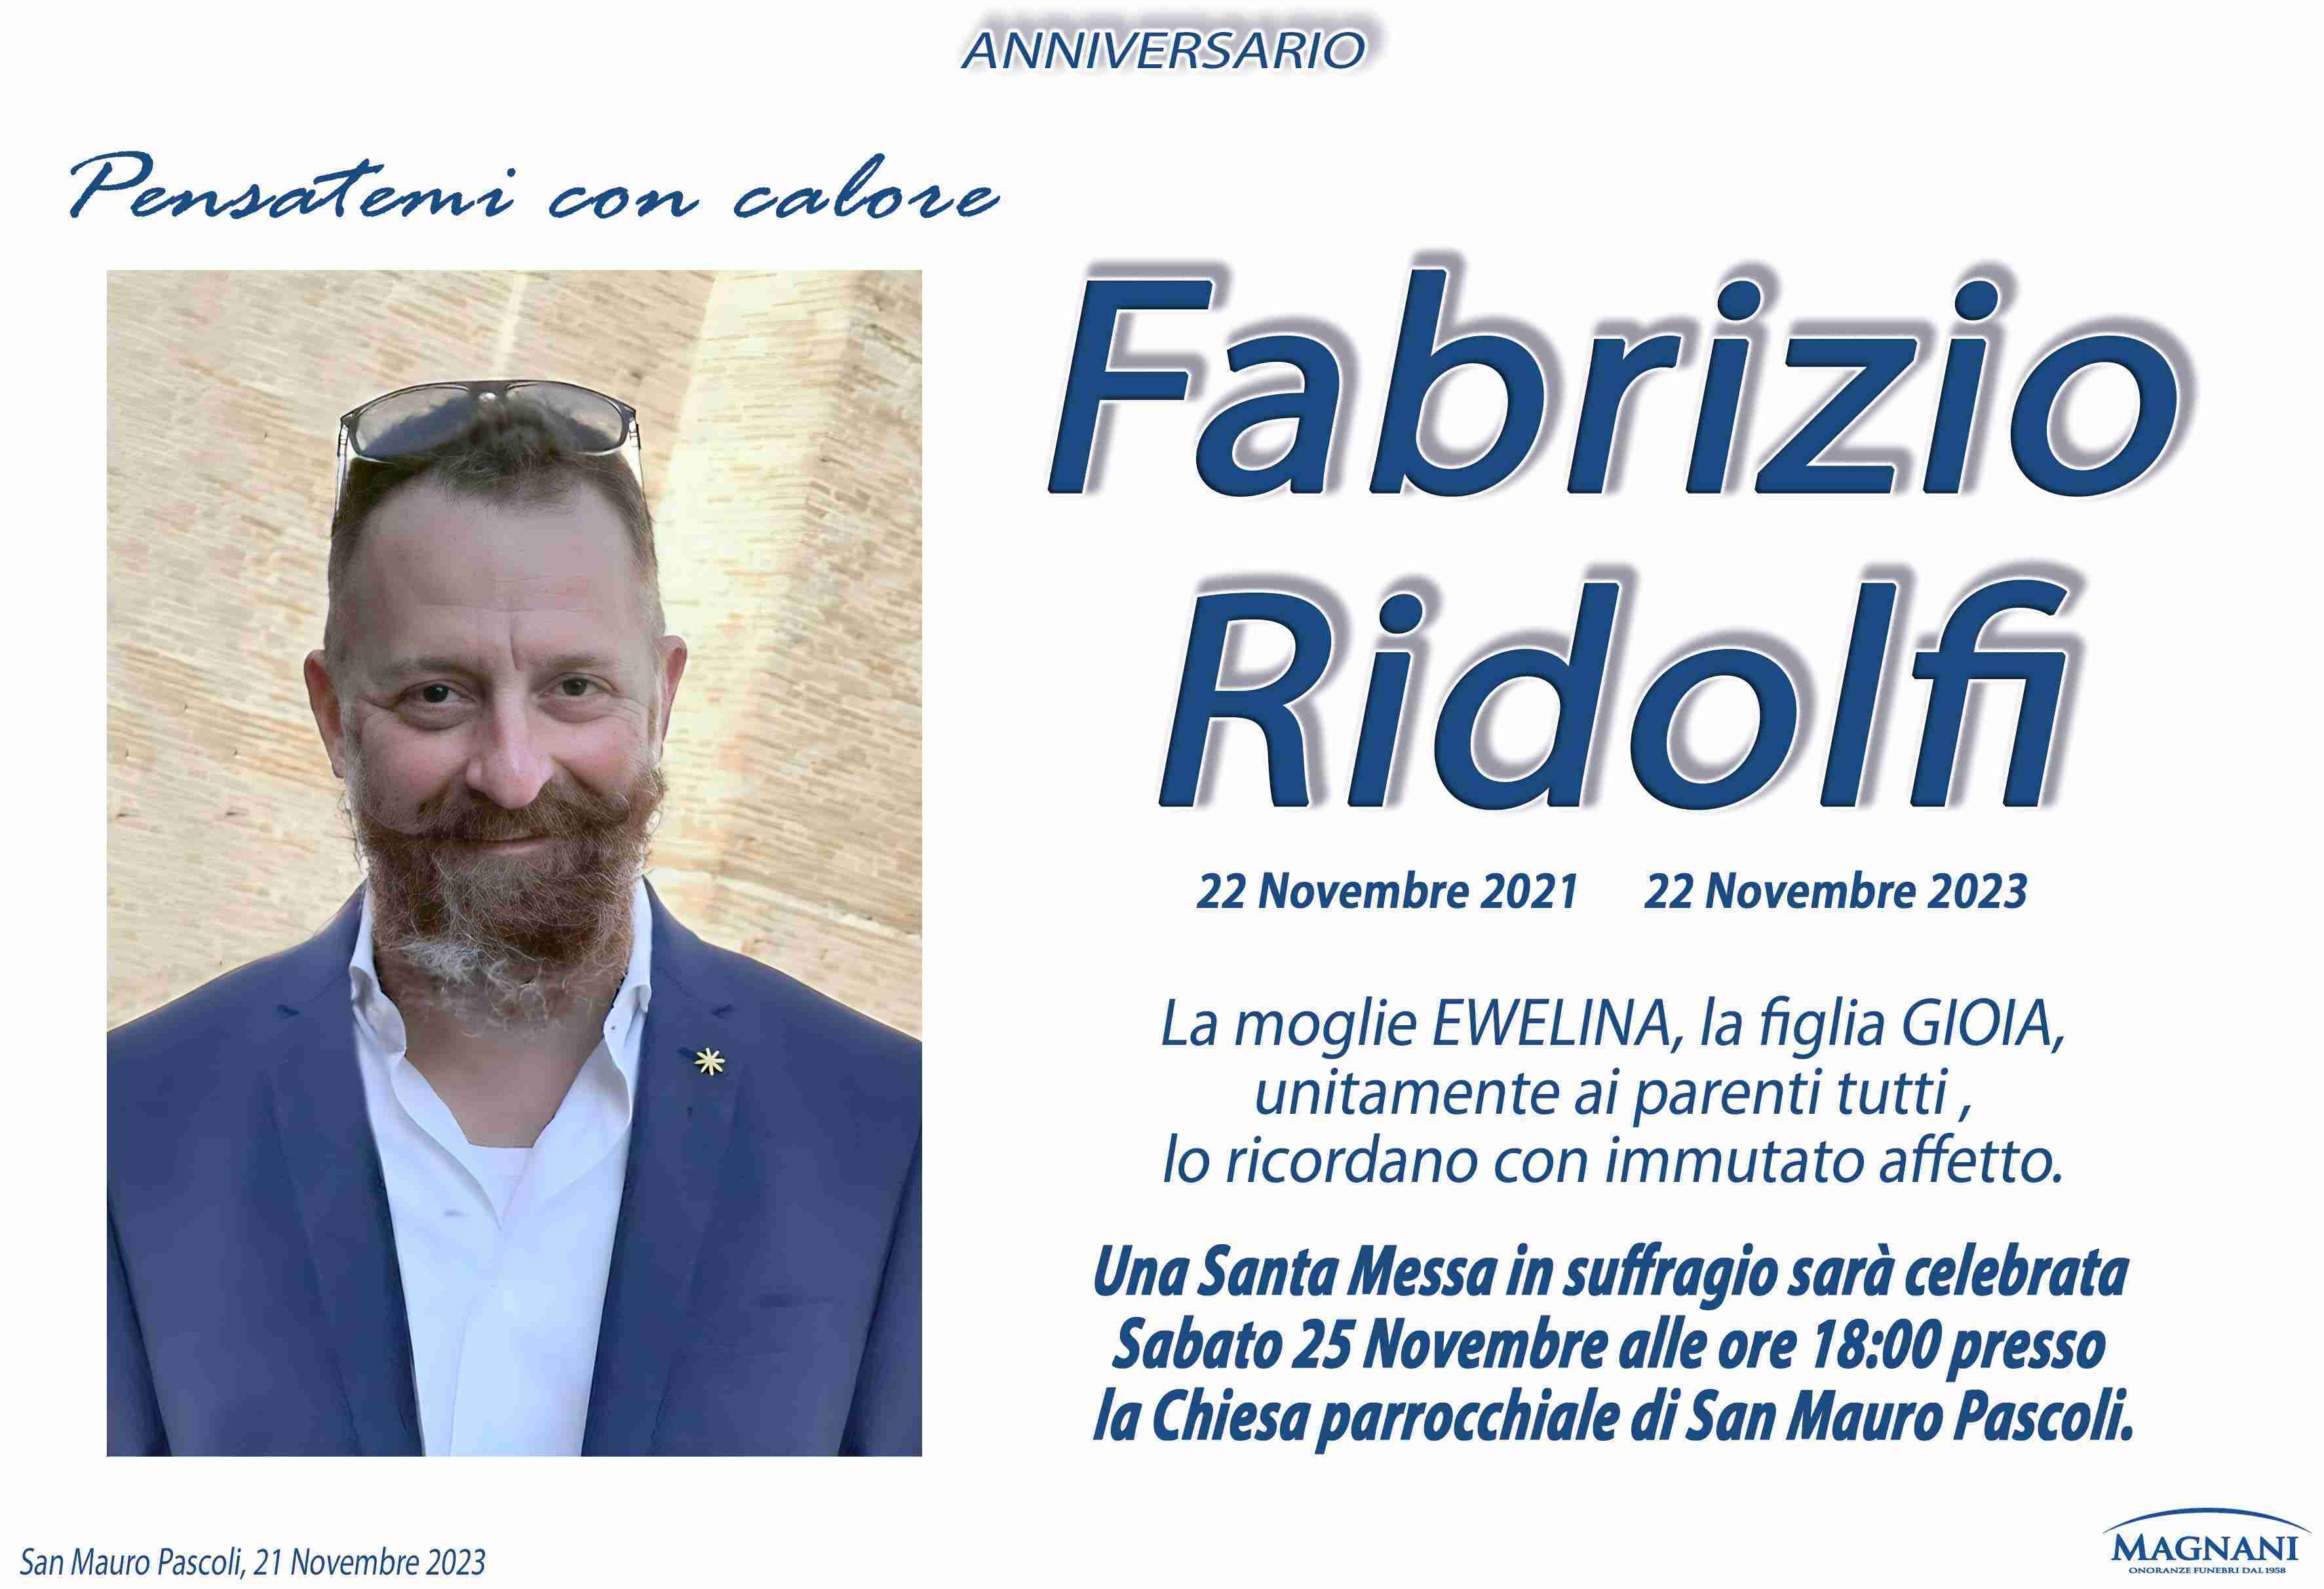 Fabrizio Ridolfi